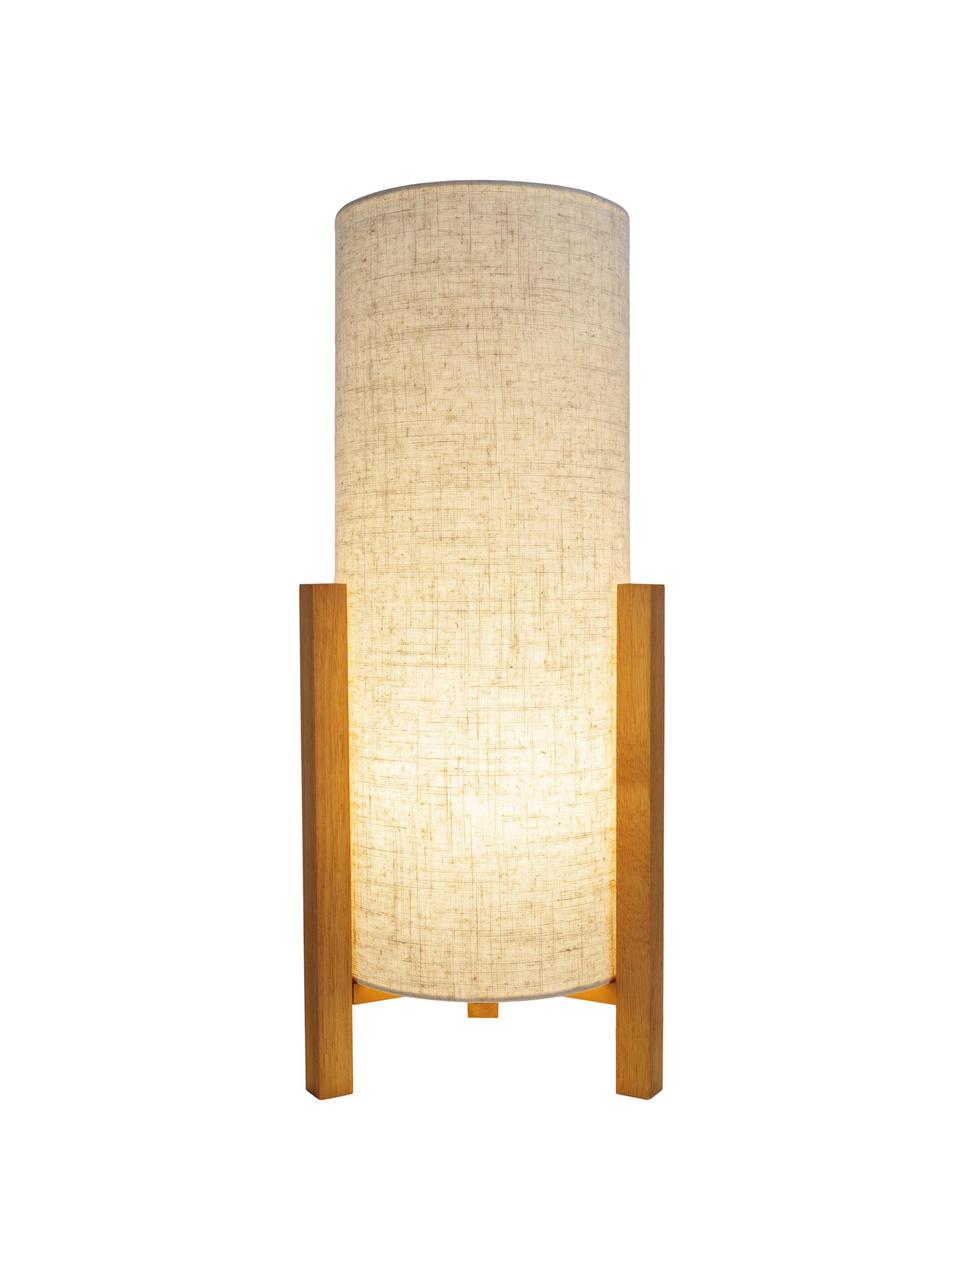 Grande lampe à poser Matilda, Blanc crème, bois clair, Ø 22 x haut. 52 cm